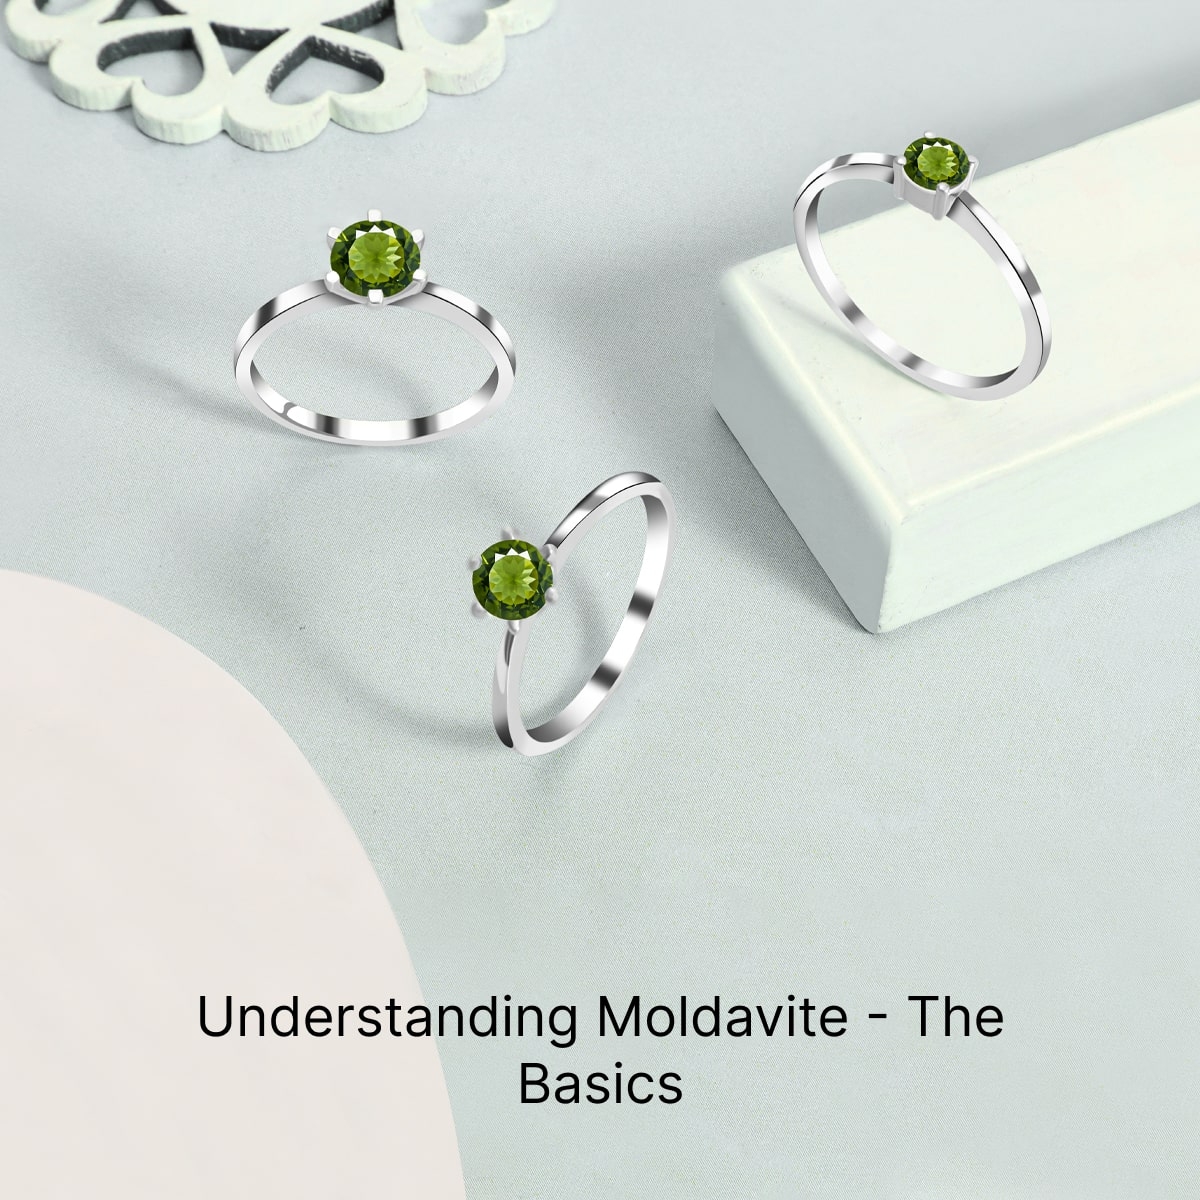 What is Moldavite